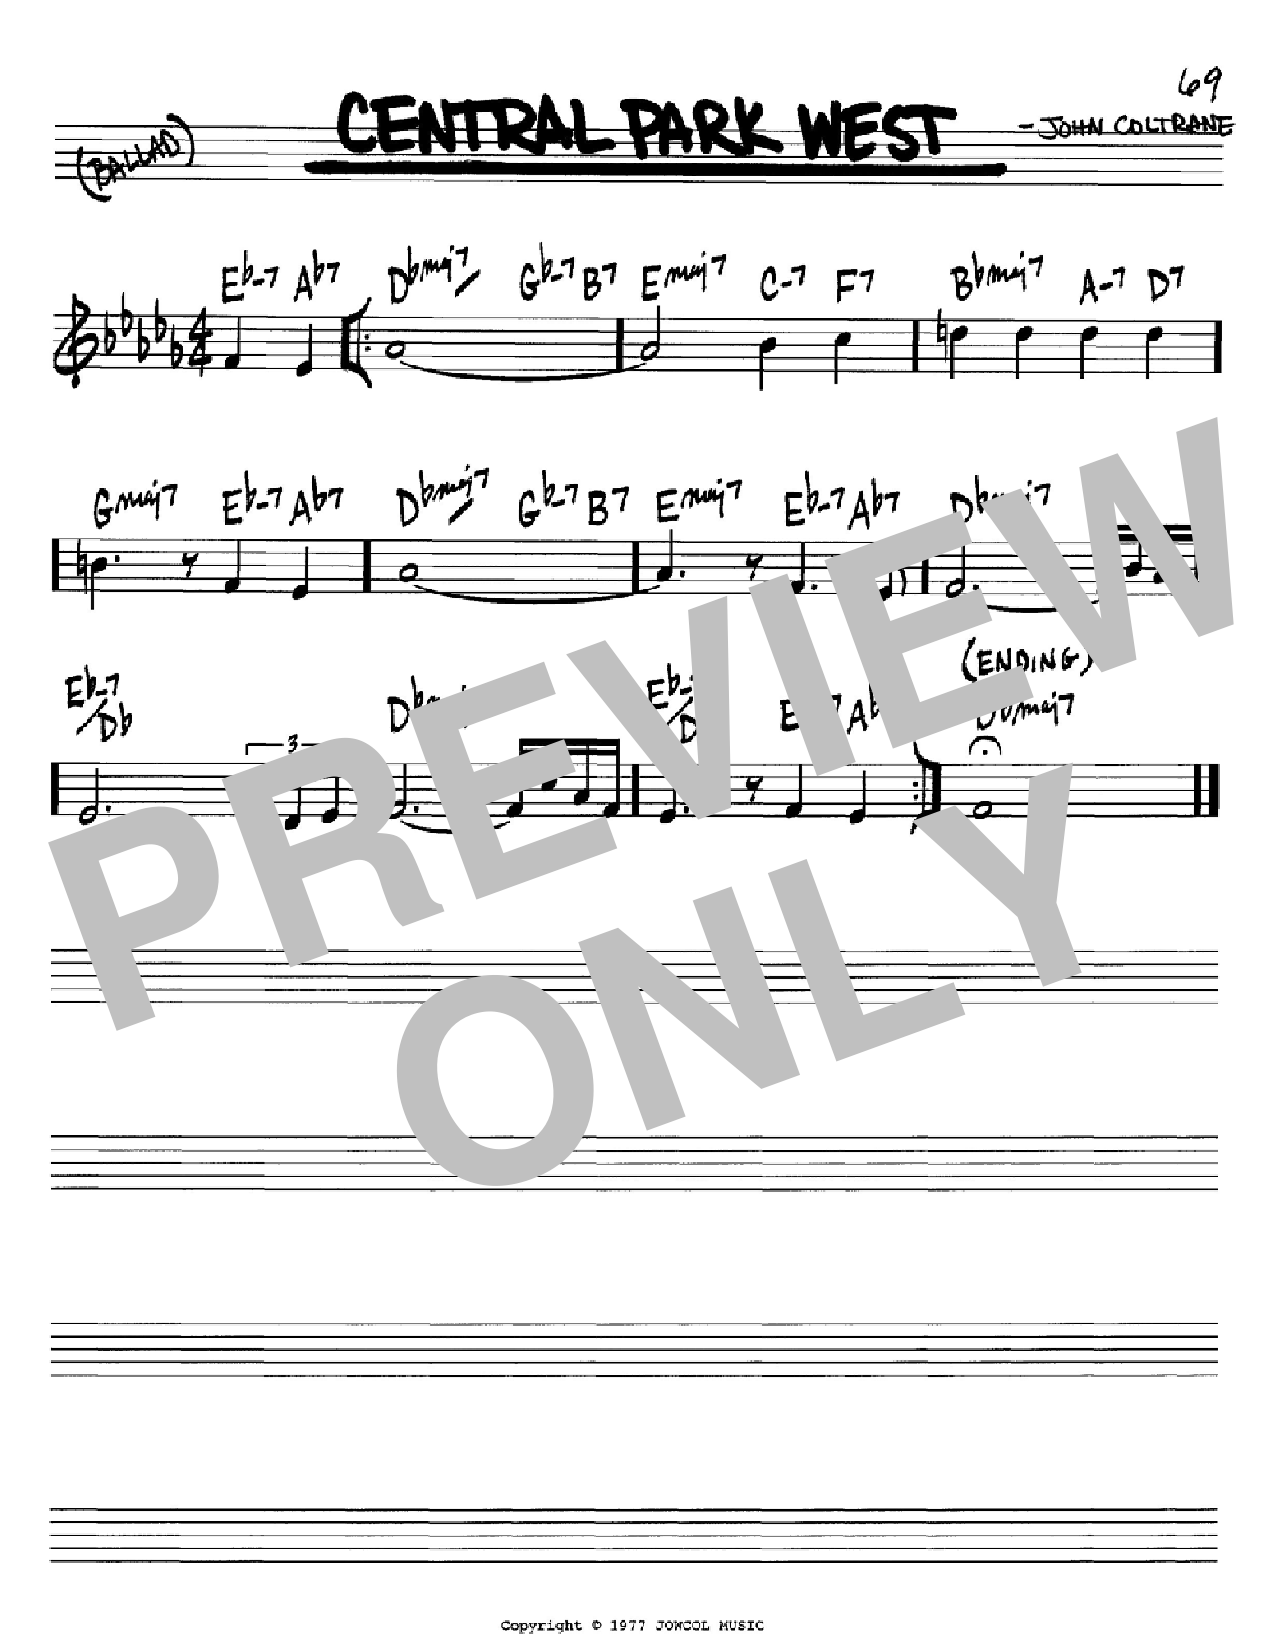 John Coltrane Central Park West Sheet Music Notes & Chords for Tenor Sax Transcription - Download or Print PDF